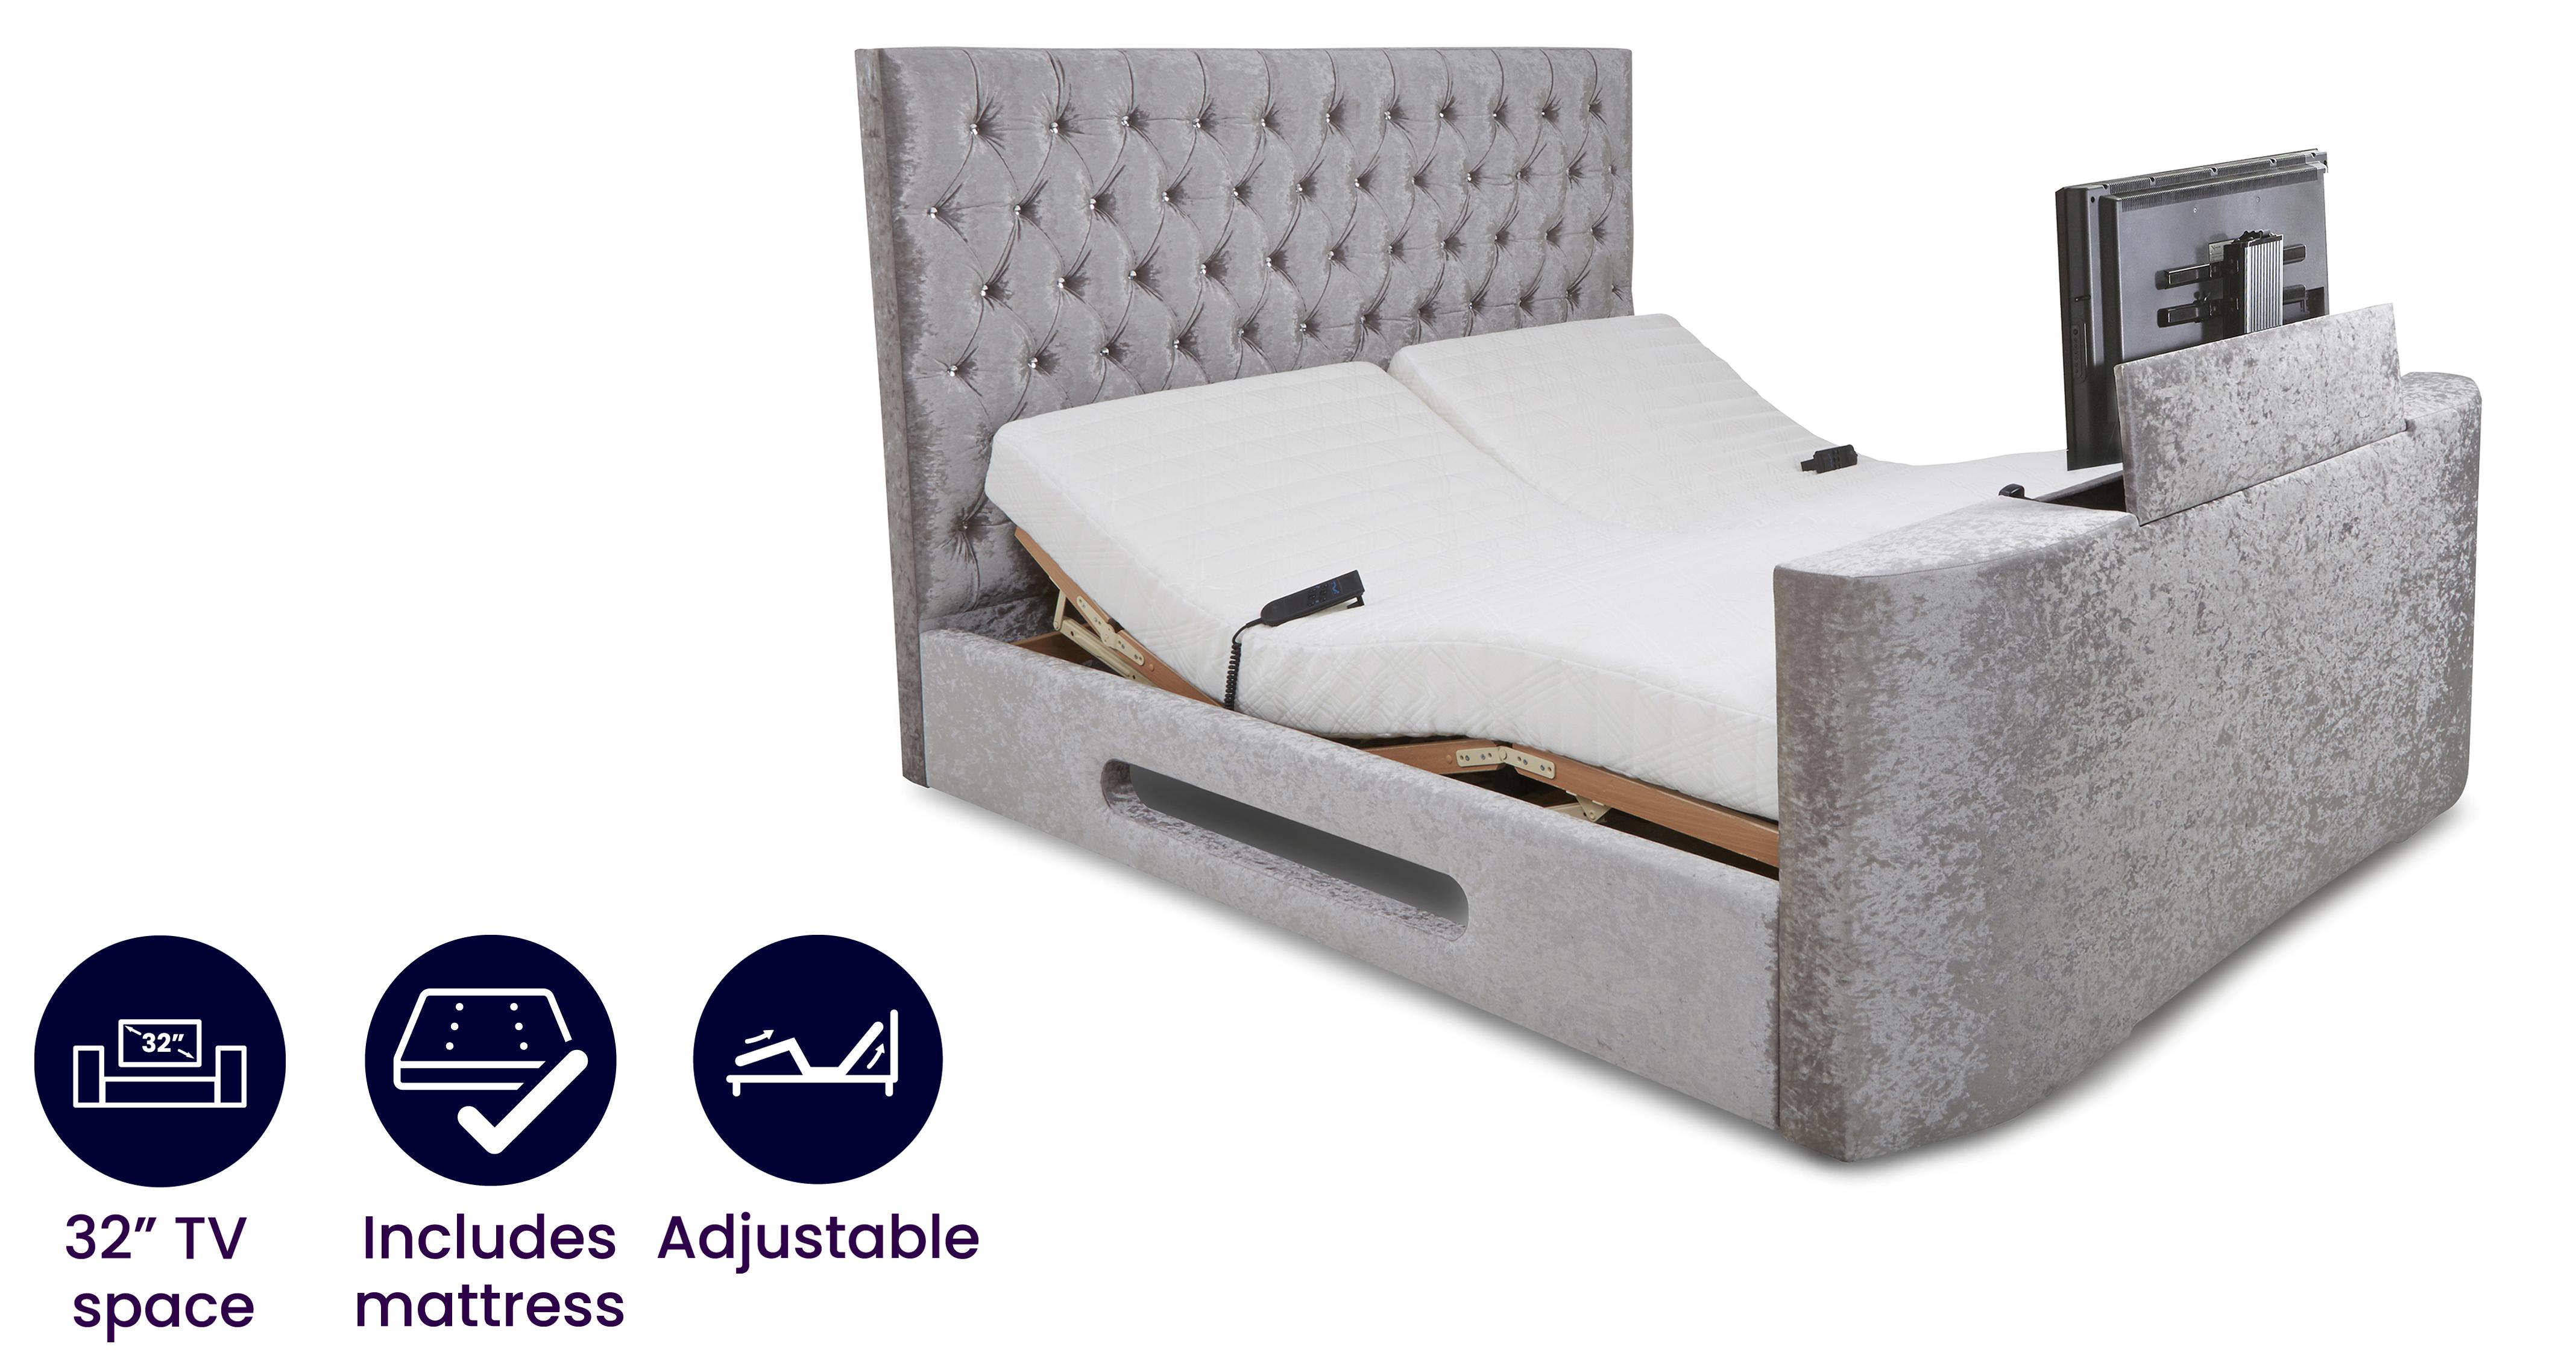 Impulse King Adjustable Tv Bed, King Size Bed And Mattress Set Finance